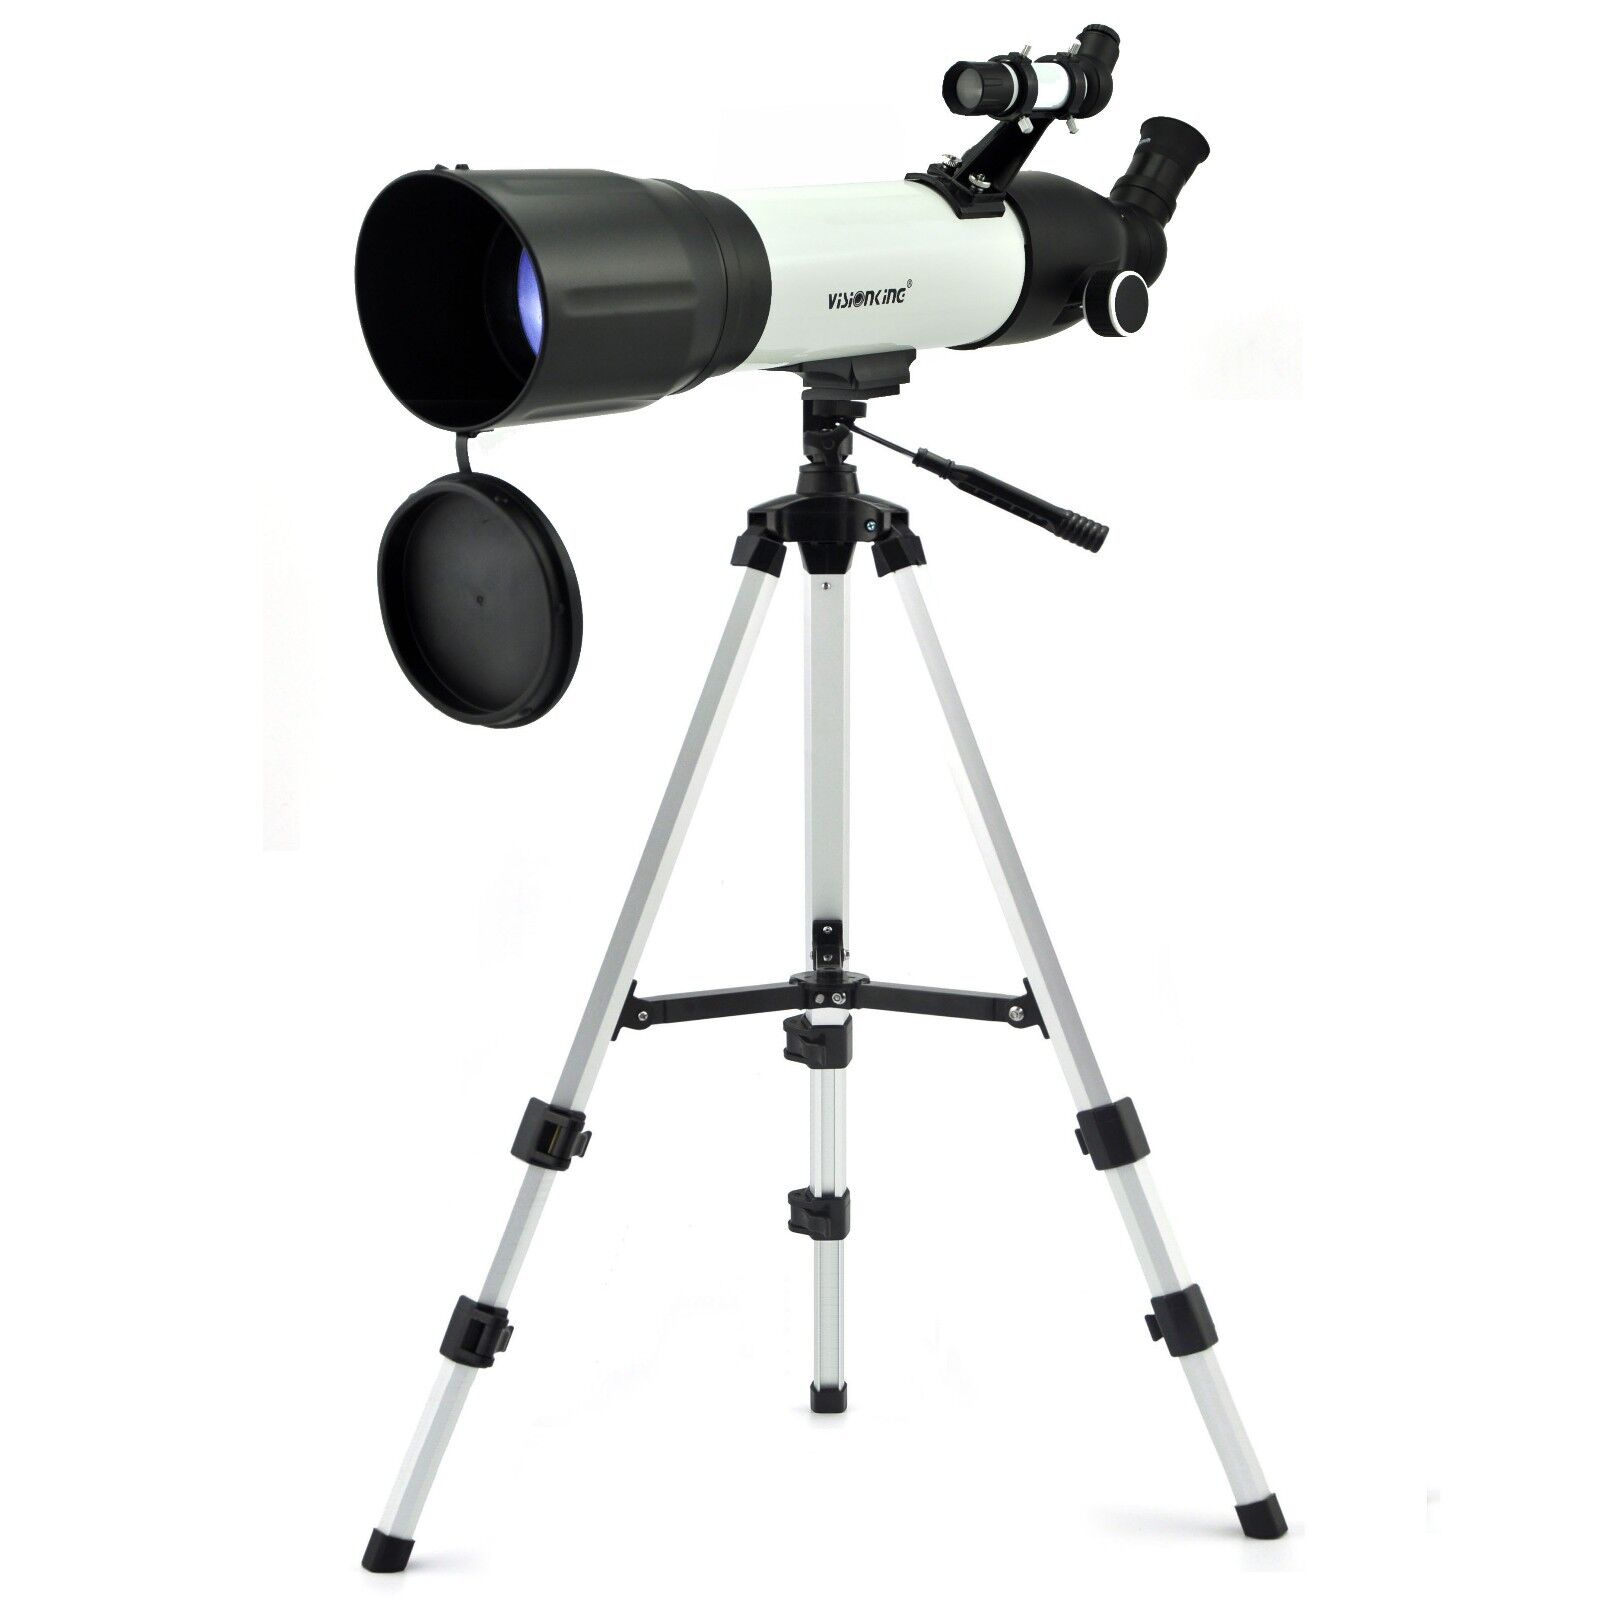 Visionking Refractor 500 / 90 mm Travel Astronomical Telescope Spotting scope